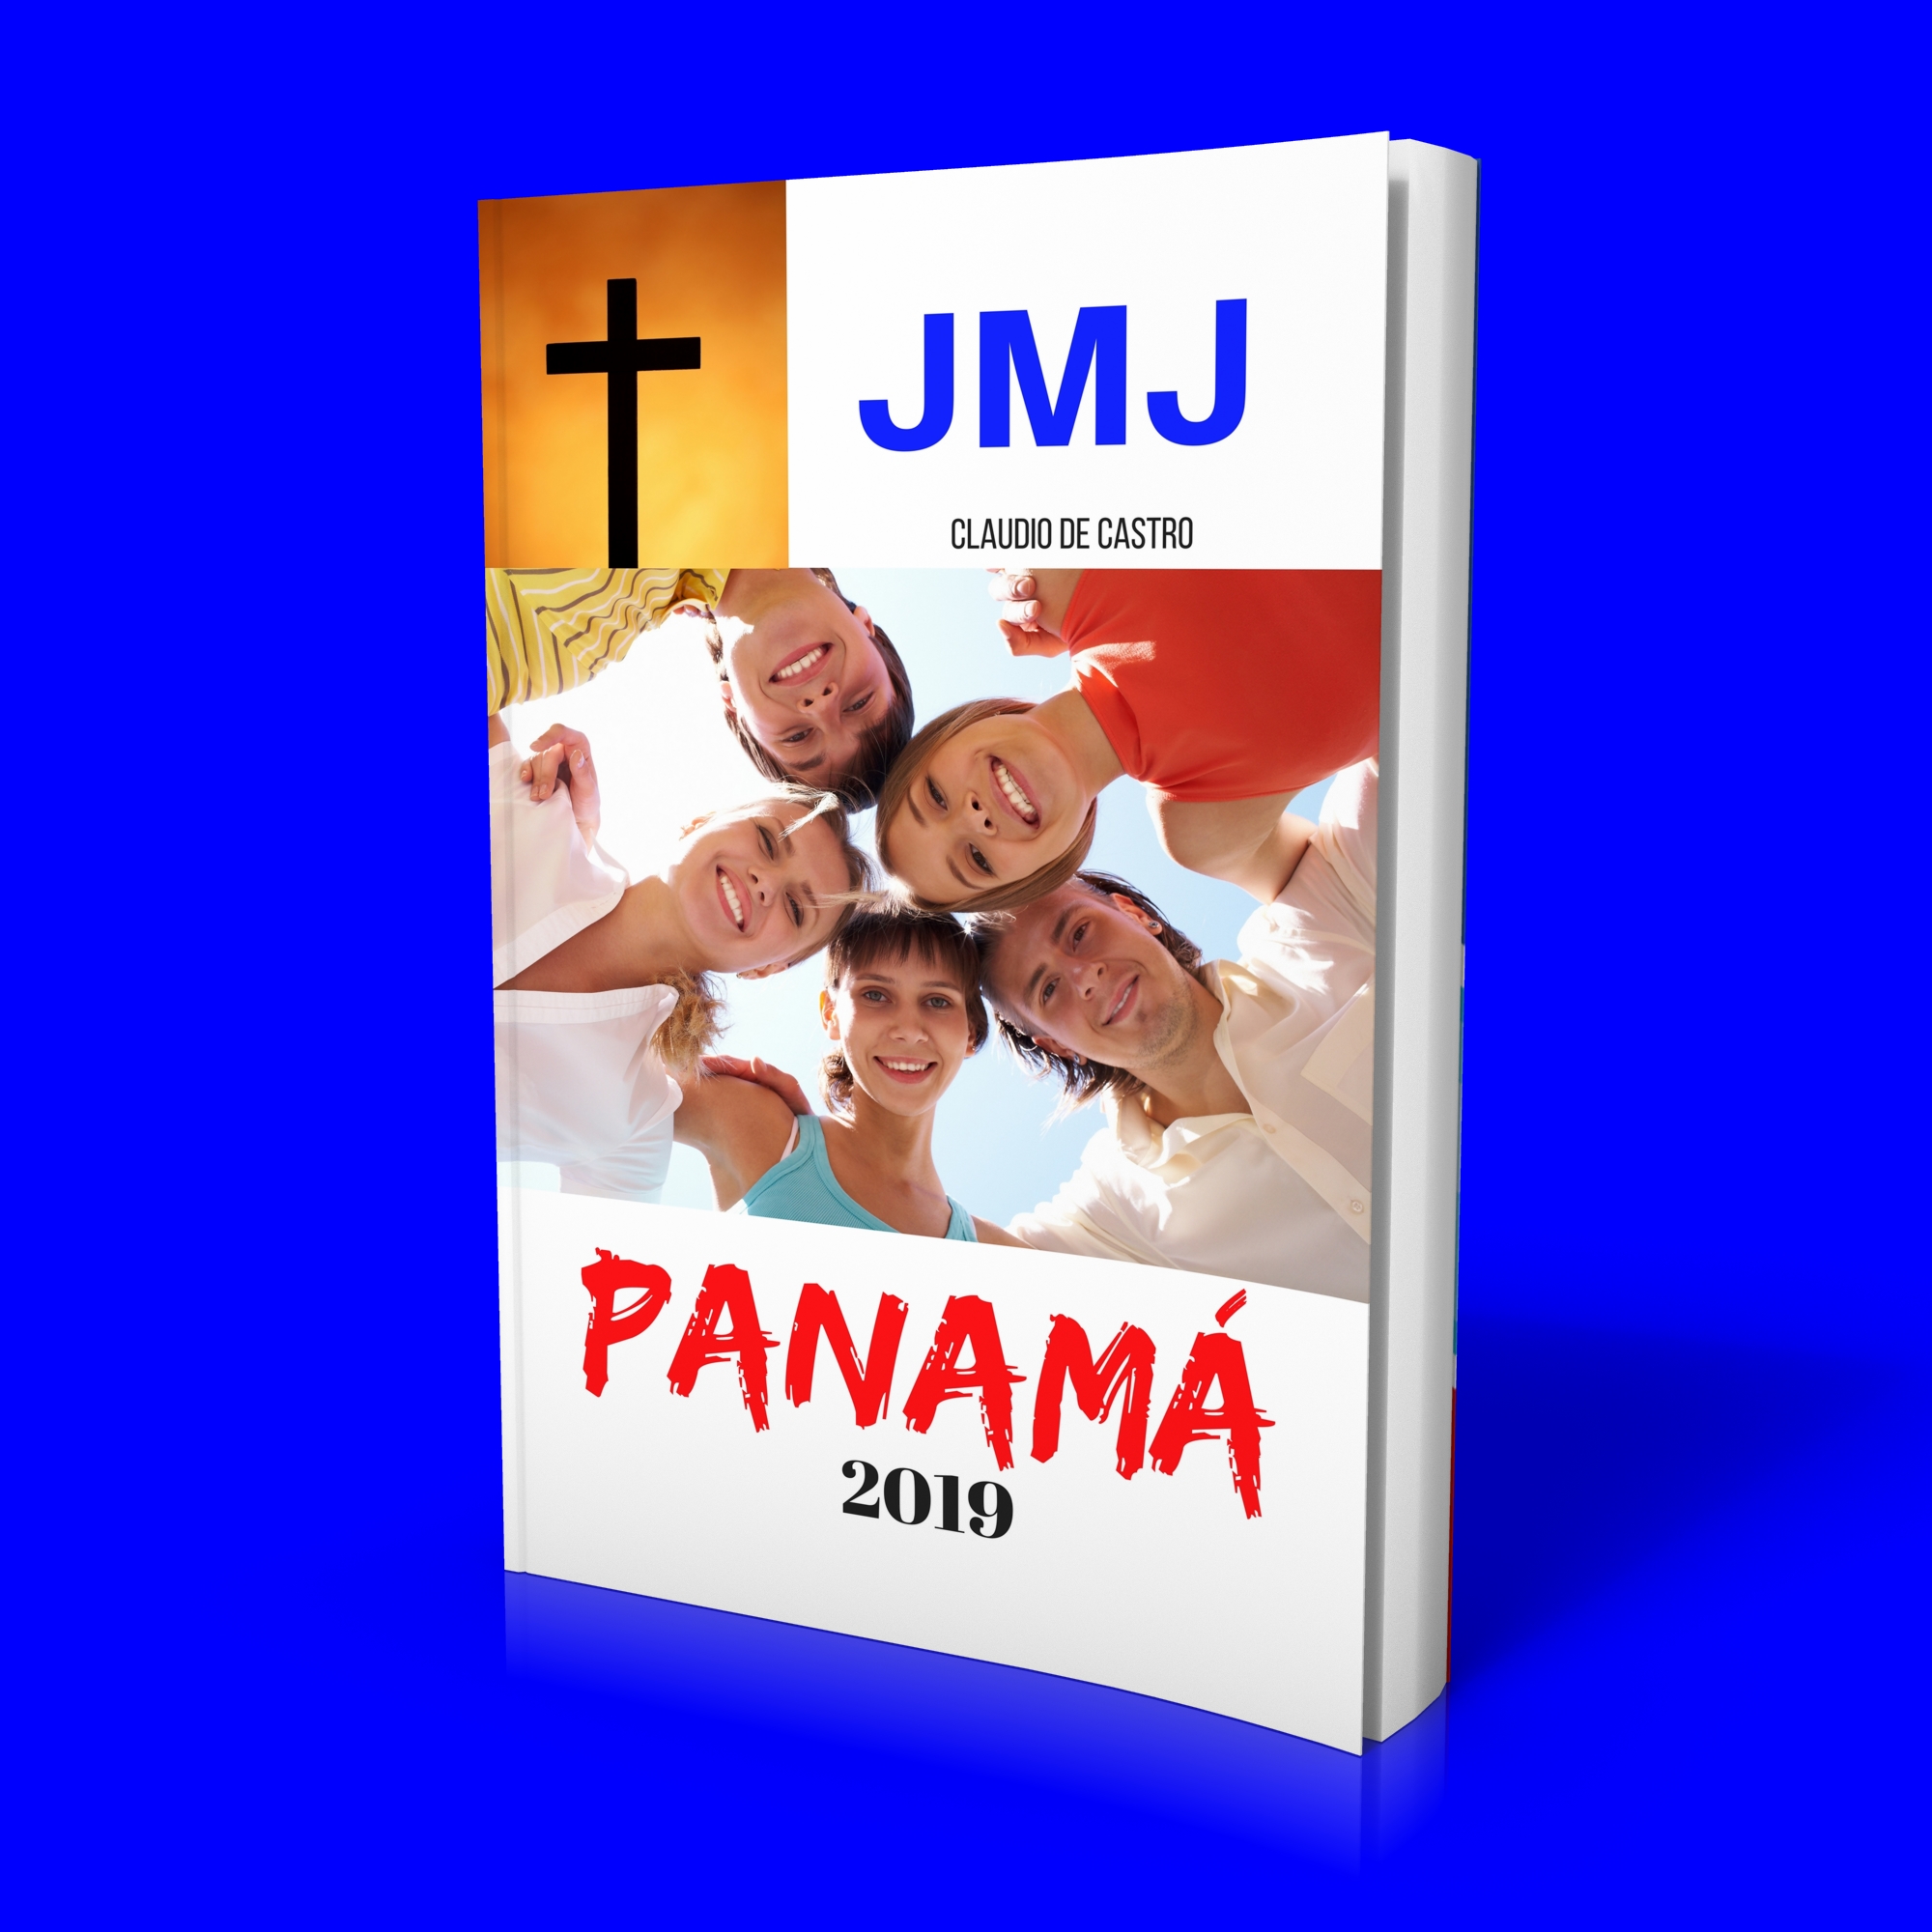 JMJ PANAMA 2019